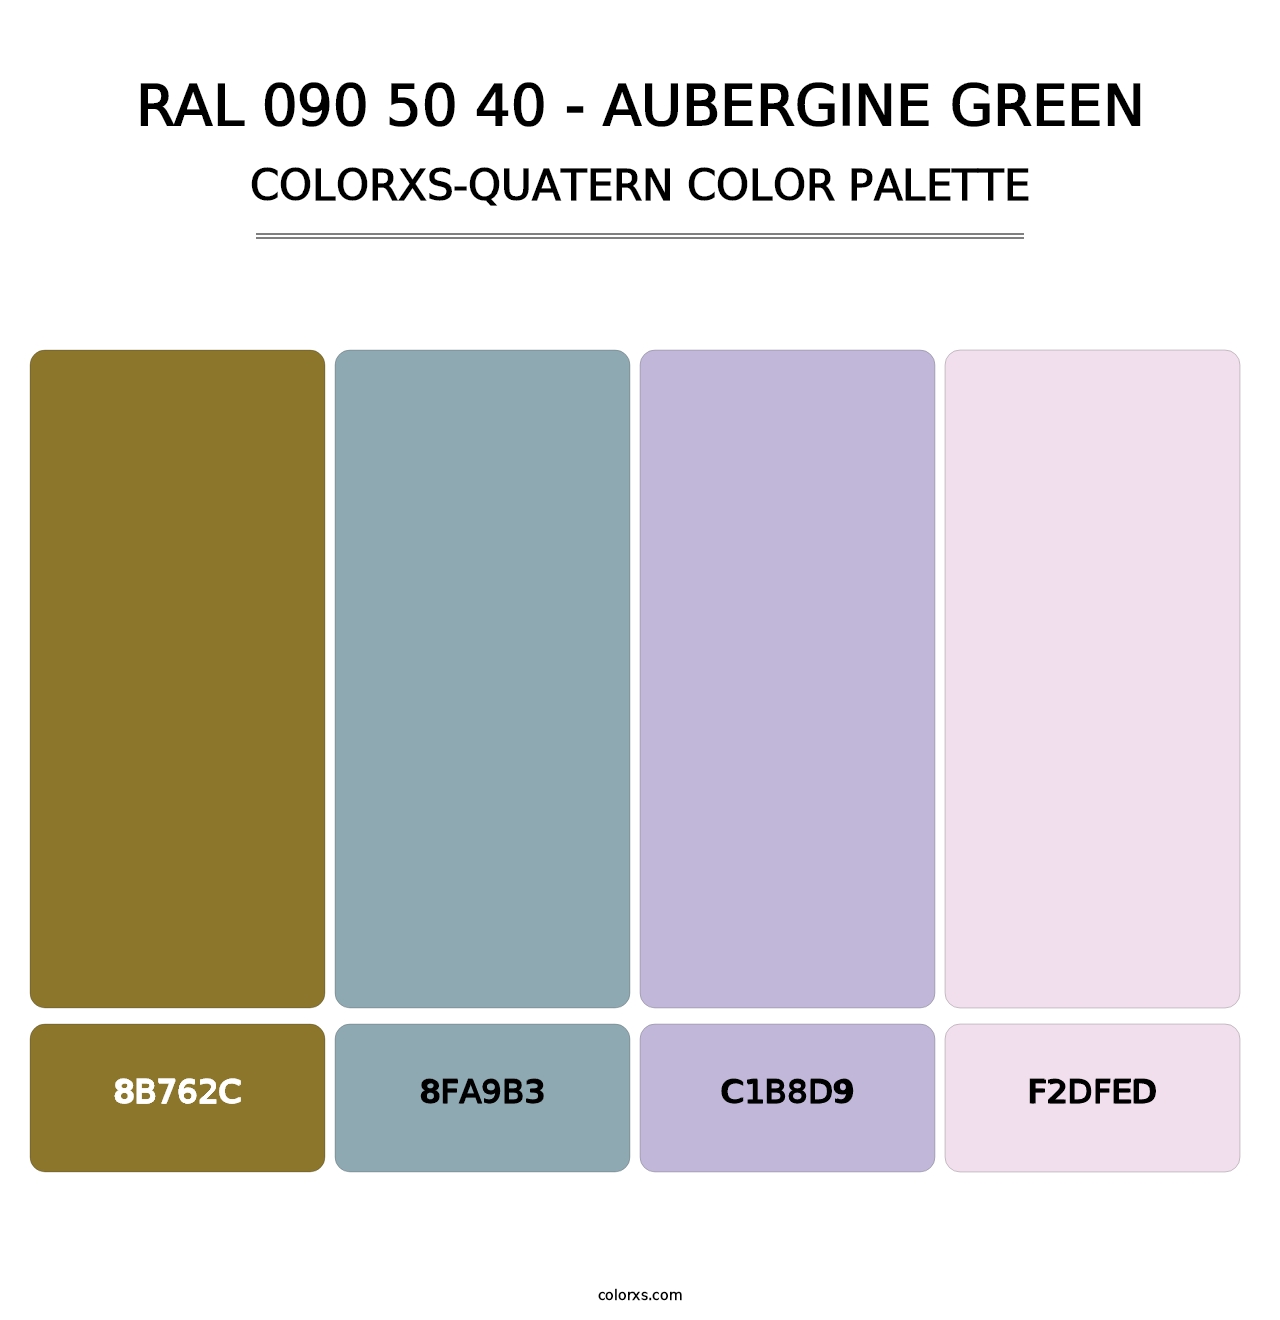 RAL 090 50 40 - Aubergine Green - Colorxs Quatern Palette